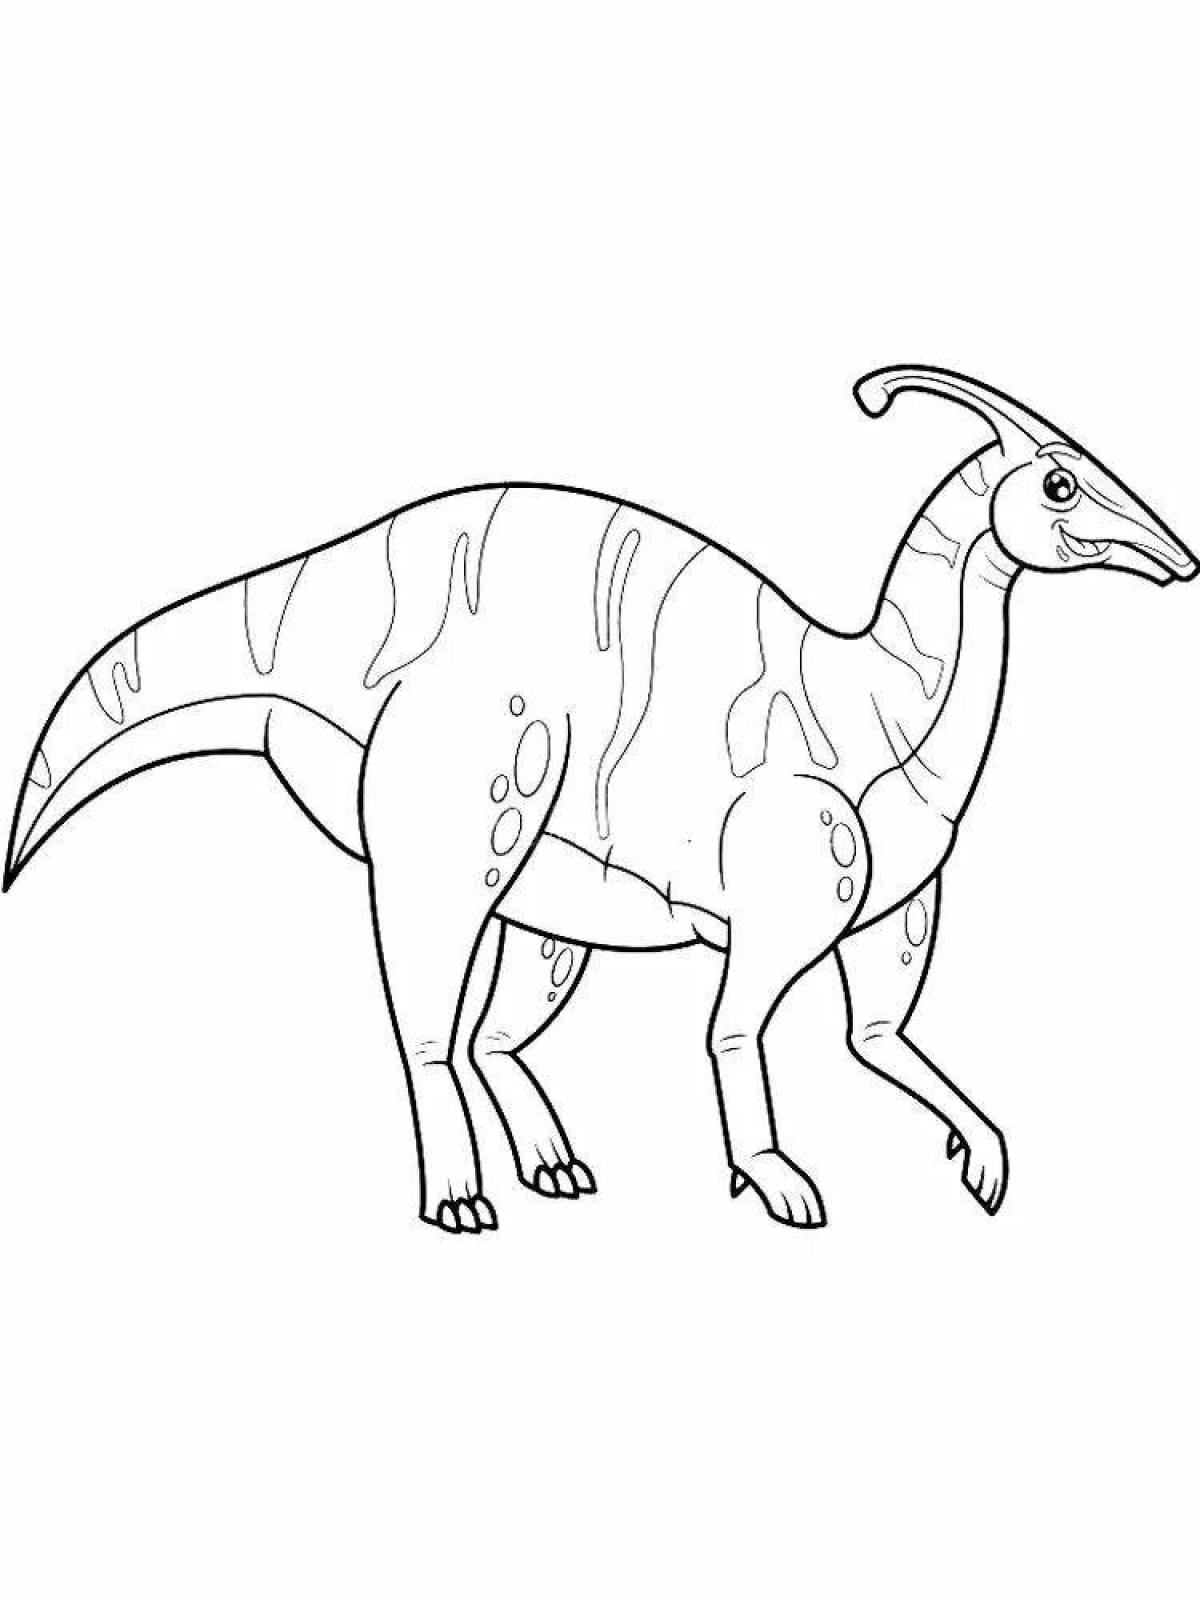 Stylish Parasaurolophus coloring page